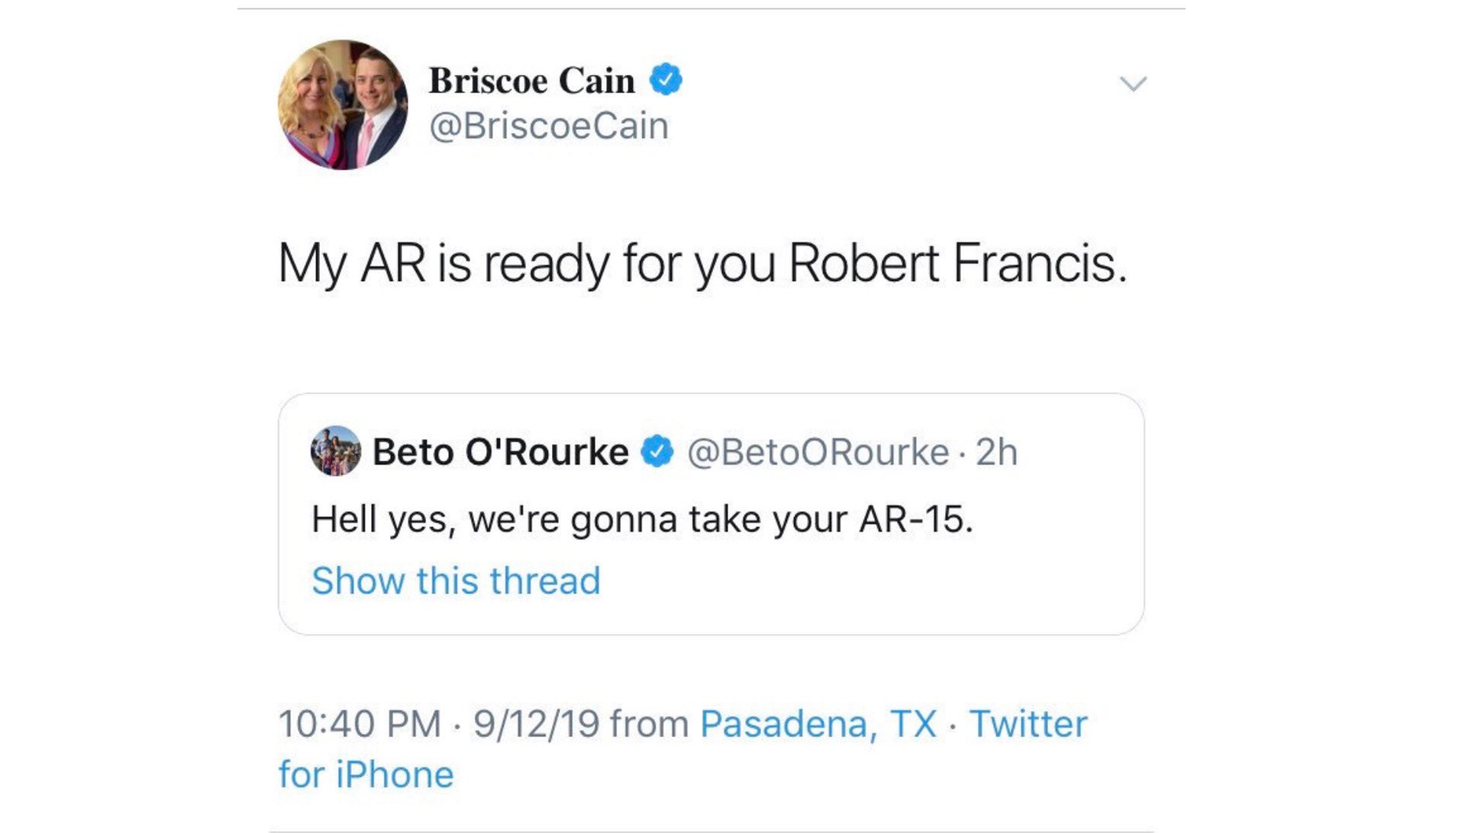 Briscoe Cain's tweet